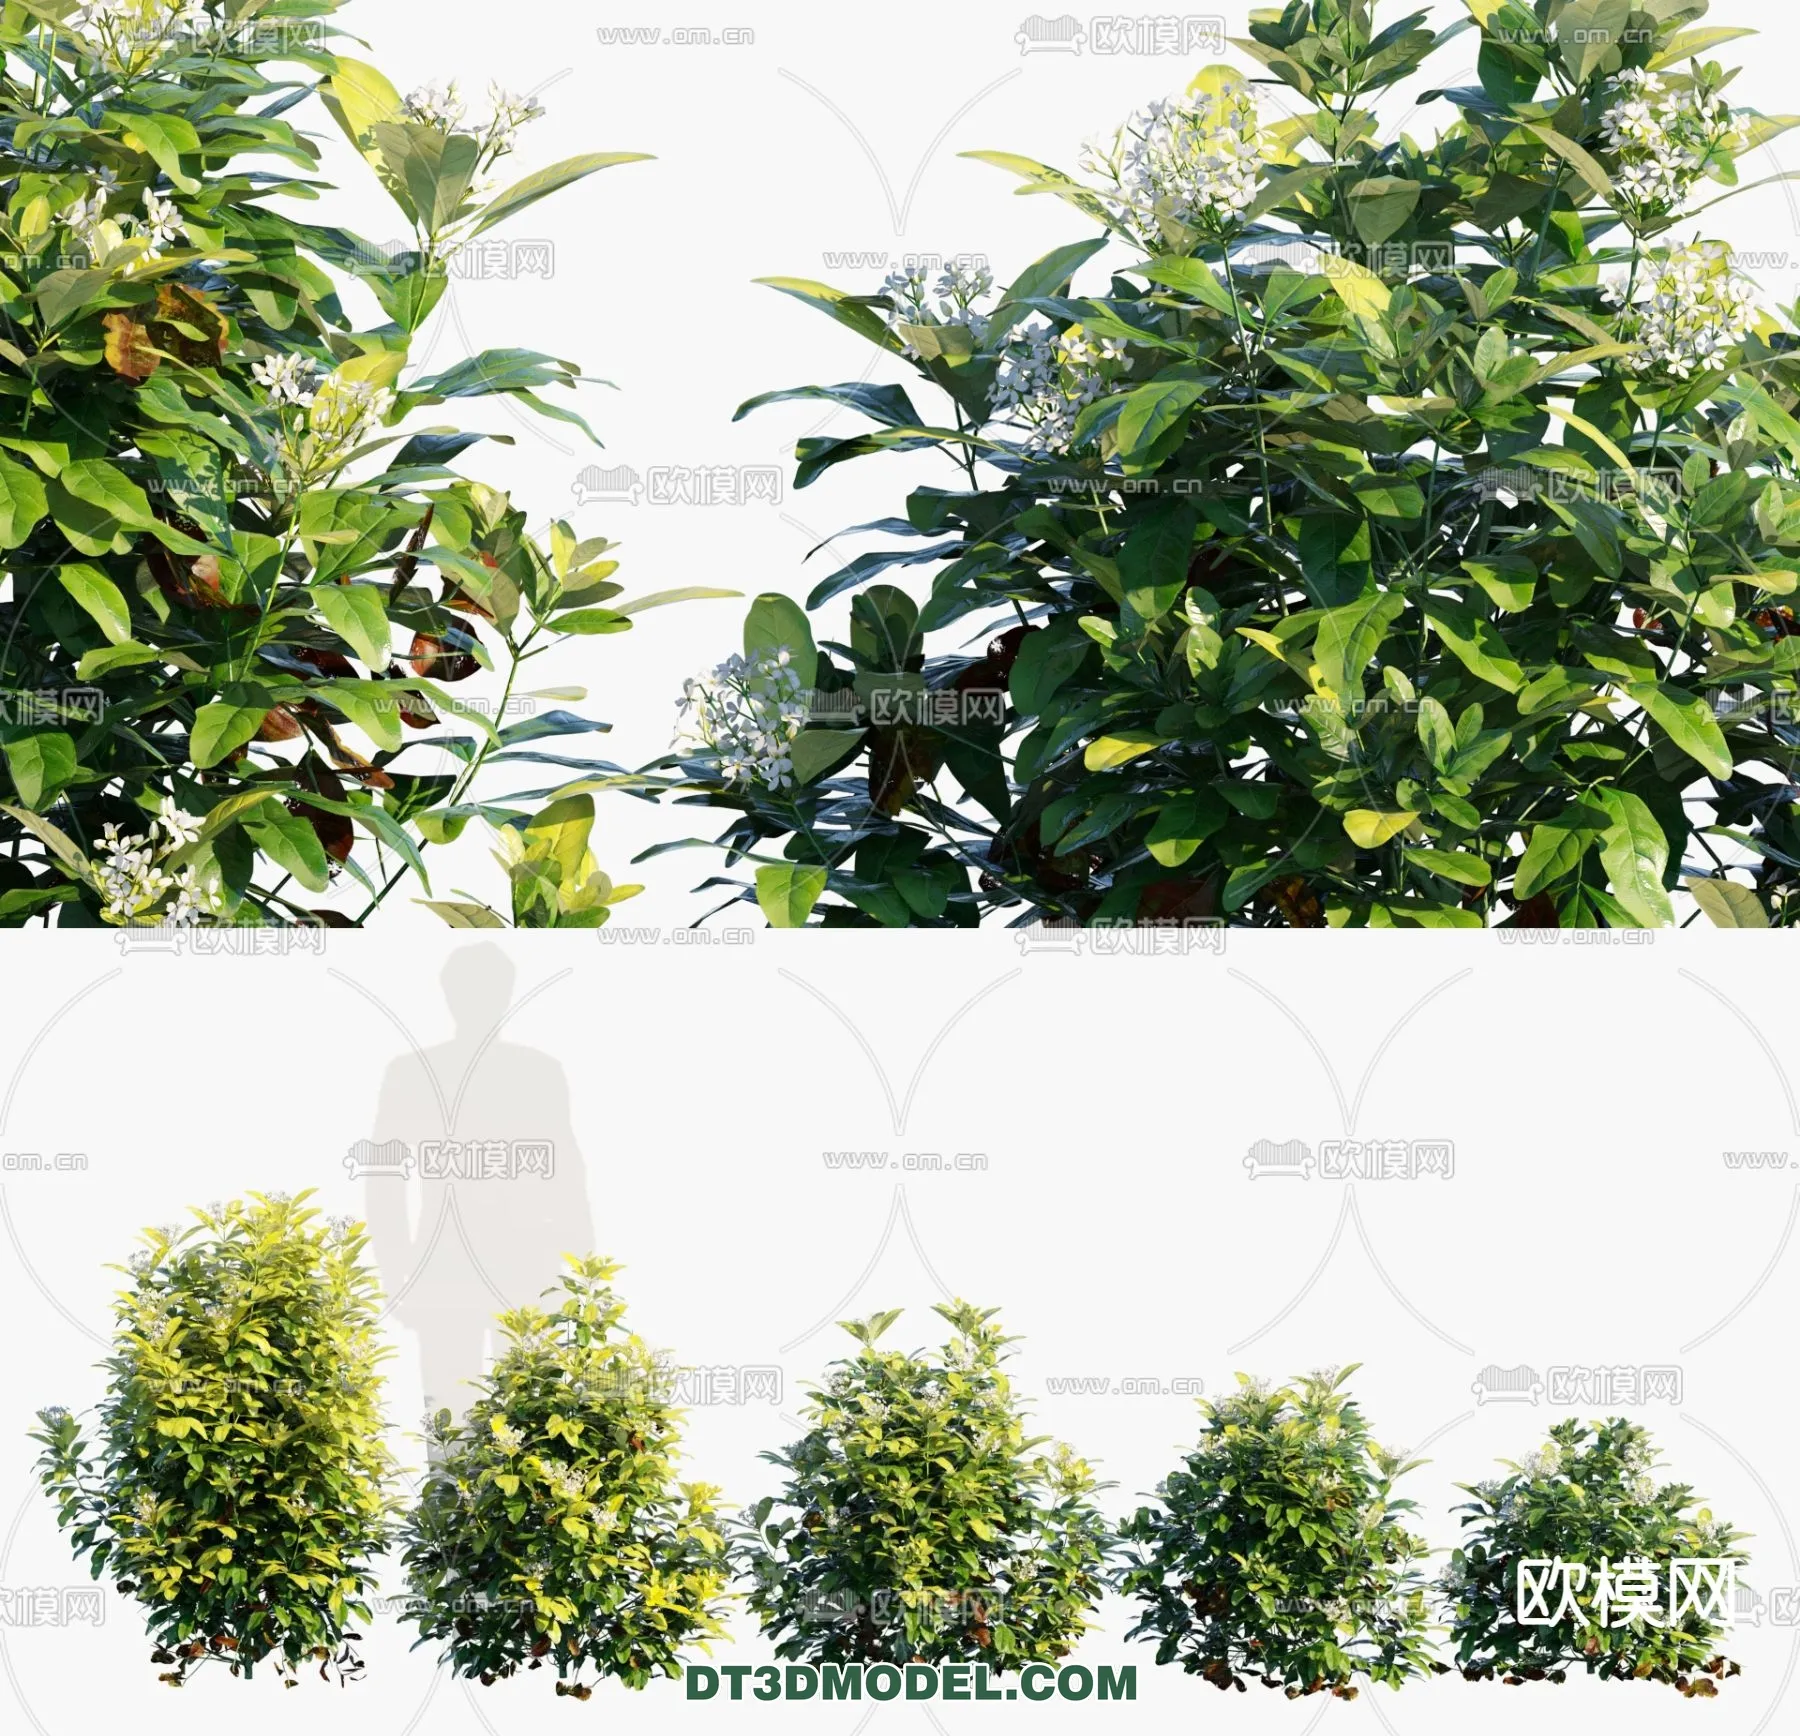 PLANTS – BUSH – VRAY / CORONA – 3D MODEL – 341